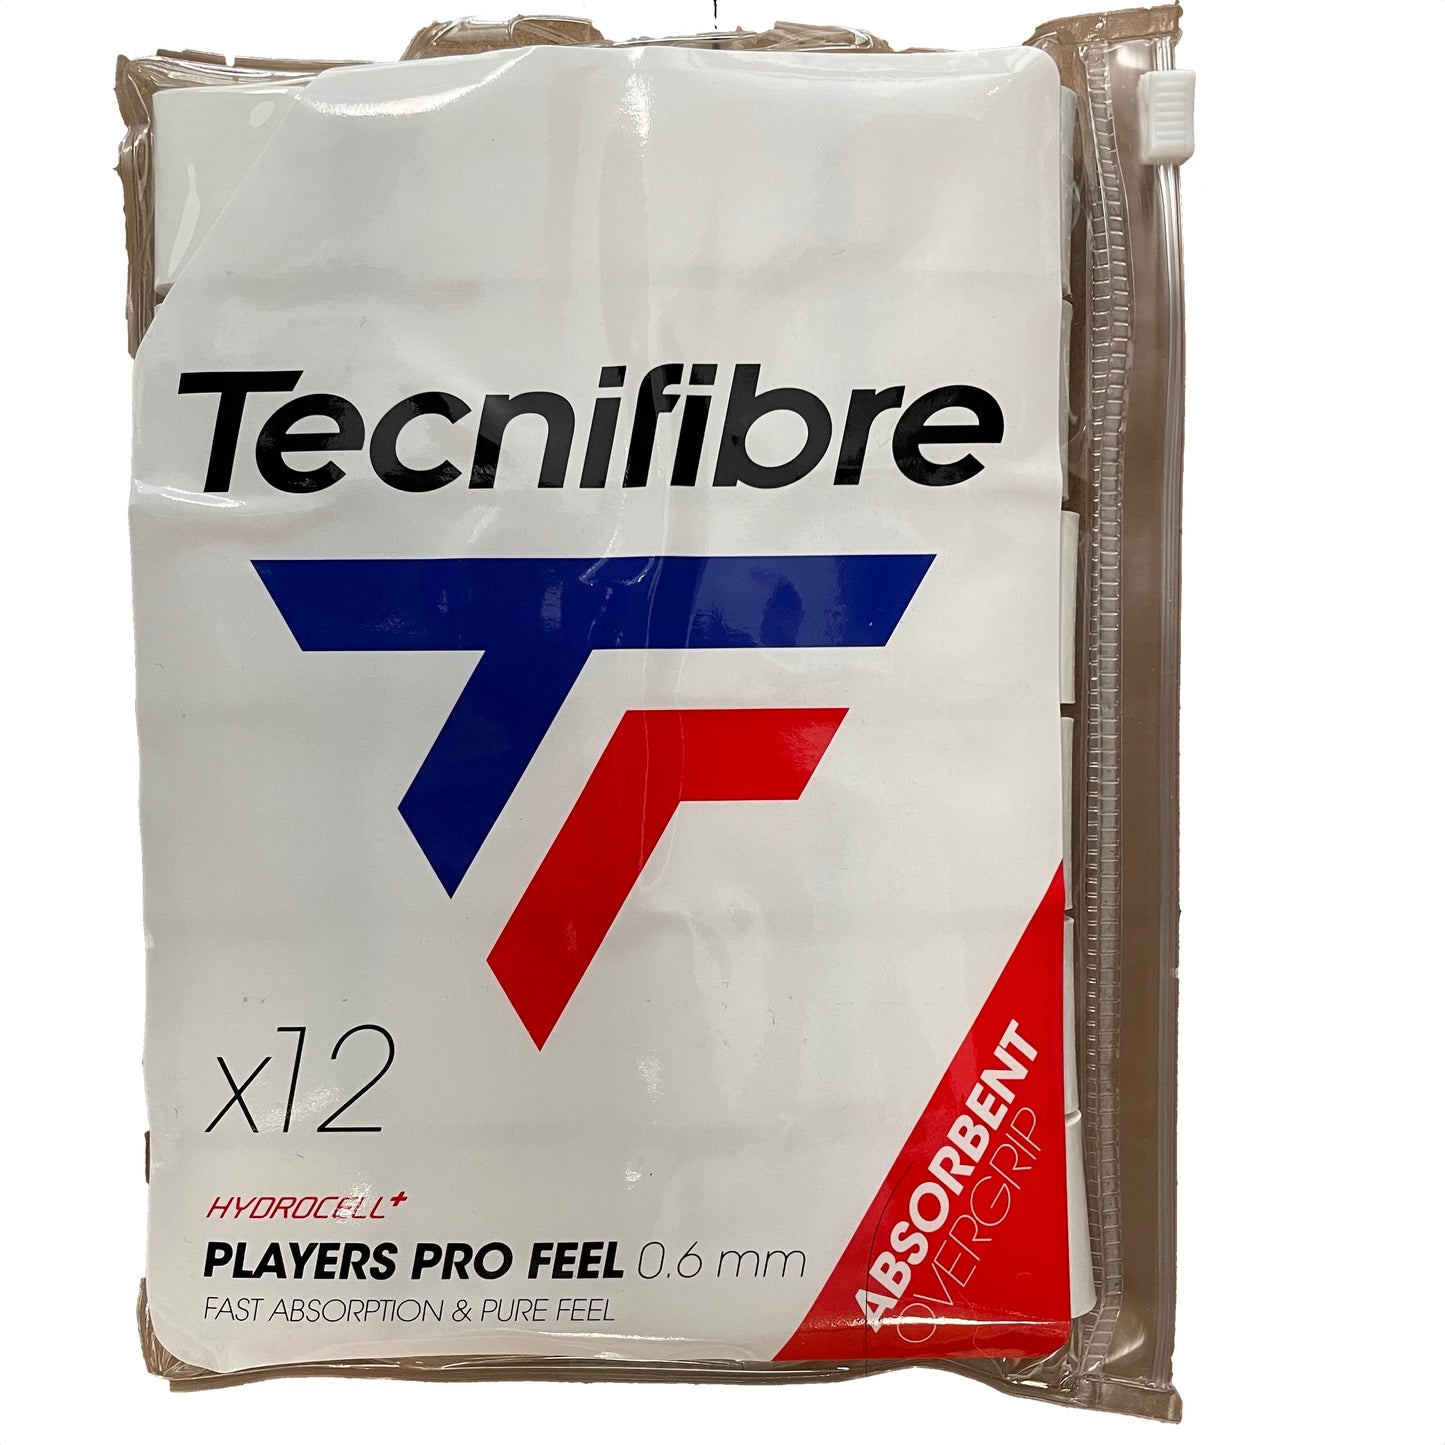 Tecnifibre Players Pro Feel x12 overgrip